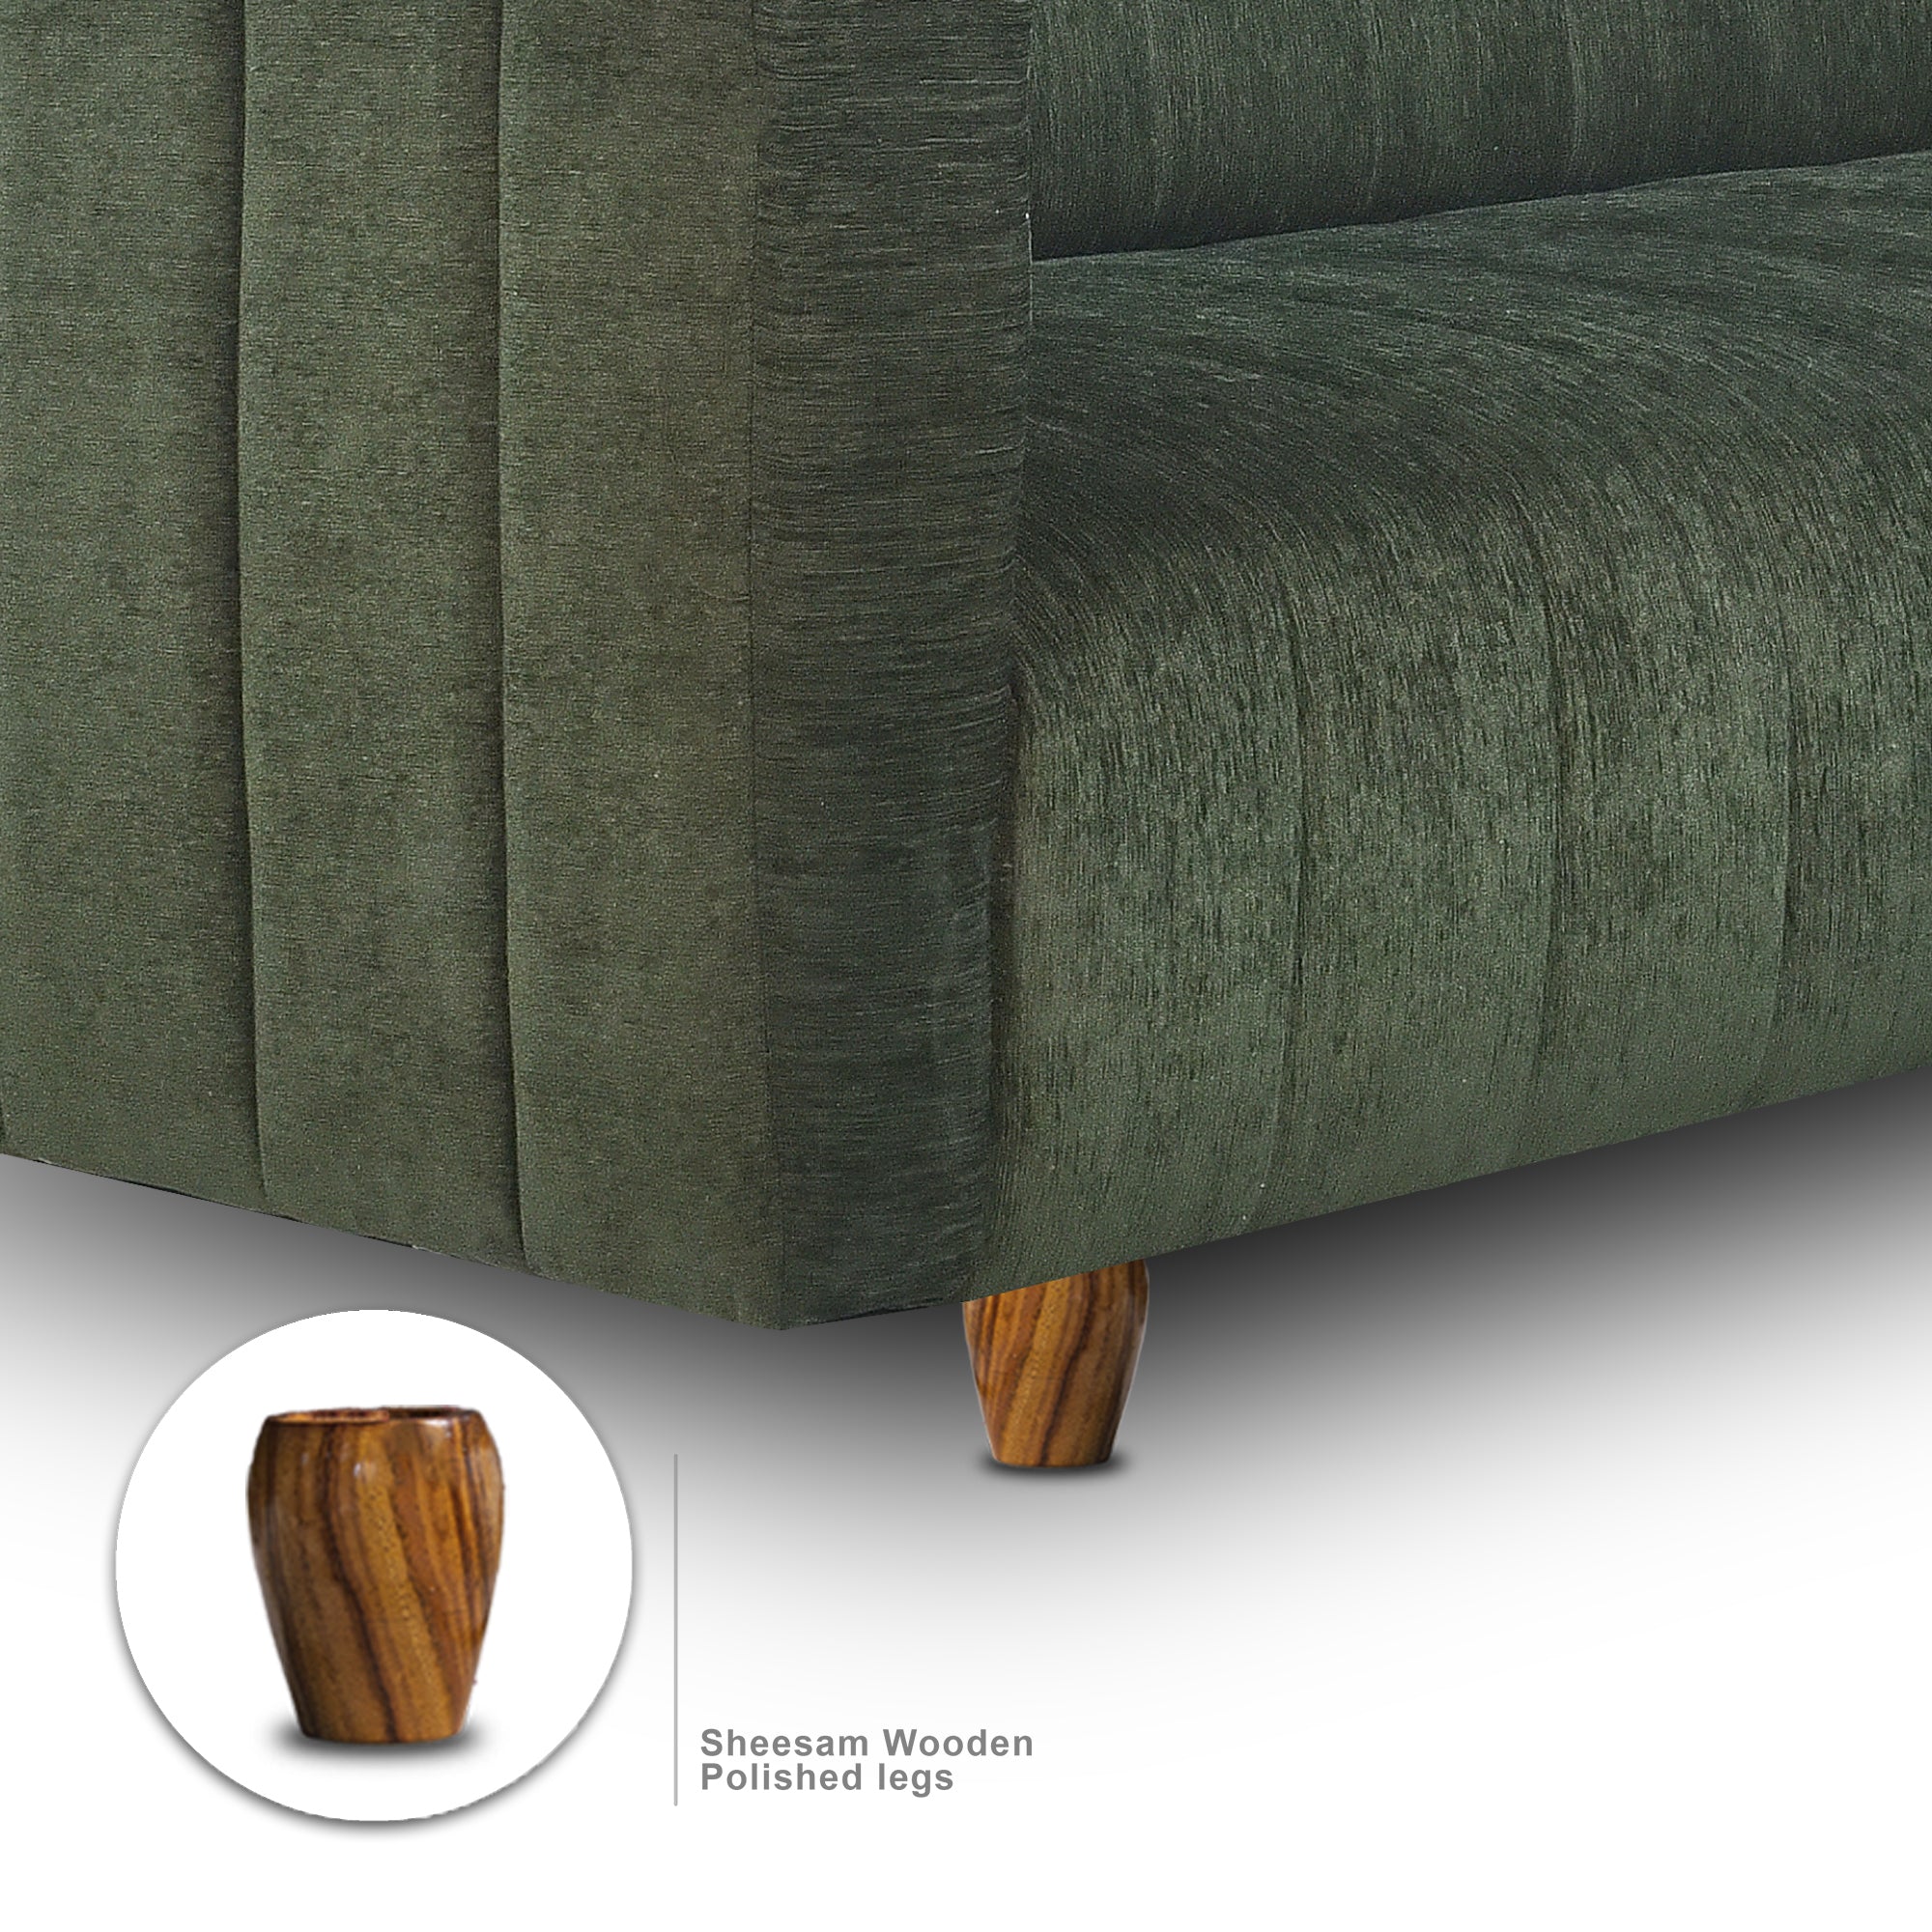 Seventh Heaven Tokyo 3 Seater Sofa, Extra Spacious, Chenille Molfino Fabric: 3 Year Warranty Fabric 3 Seater Sofa Green (Finish Color -, DIY(Do-It-Yourself)